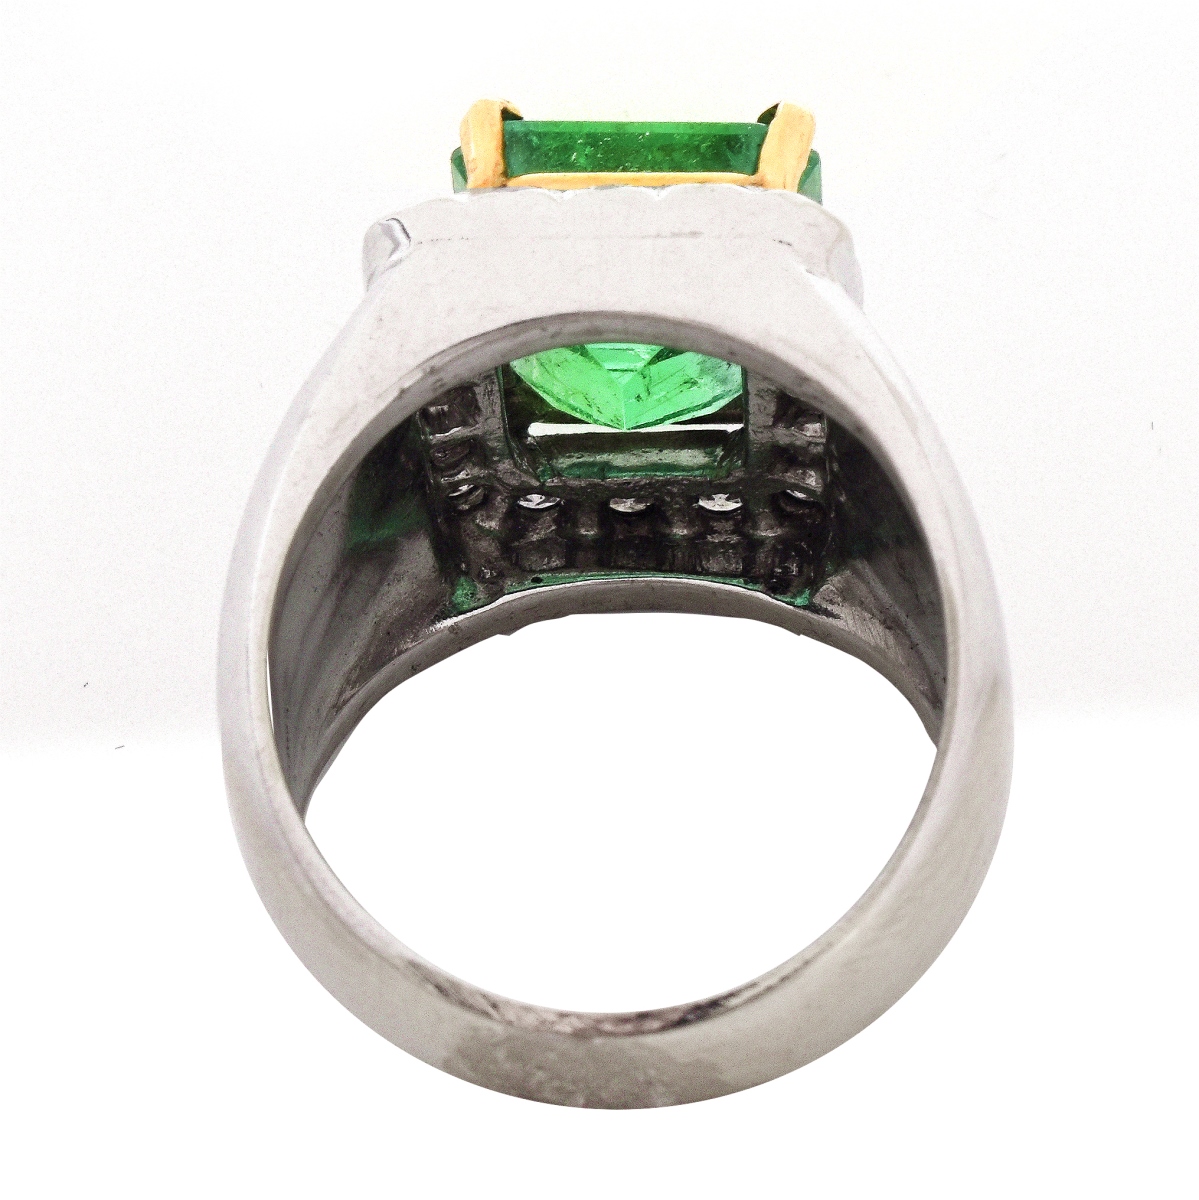 GAL 6.0 Carat Emerald, Diamond and 18K Ring